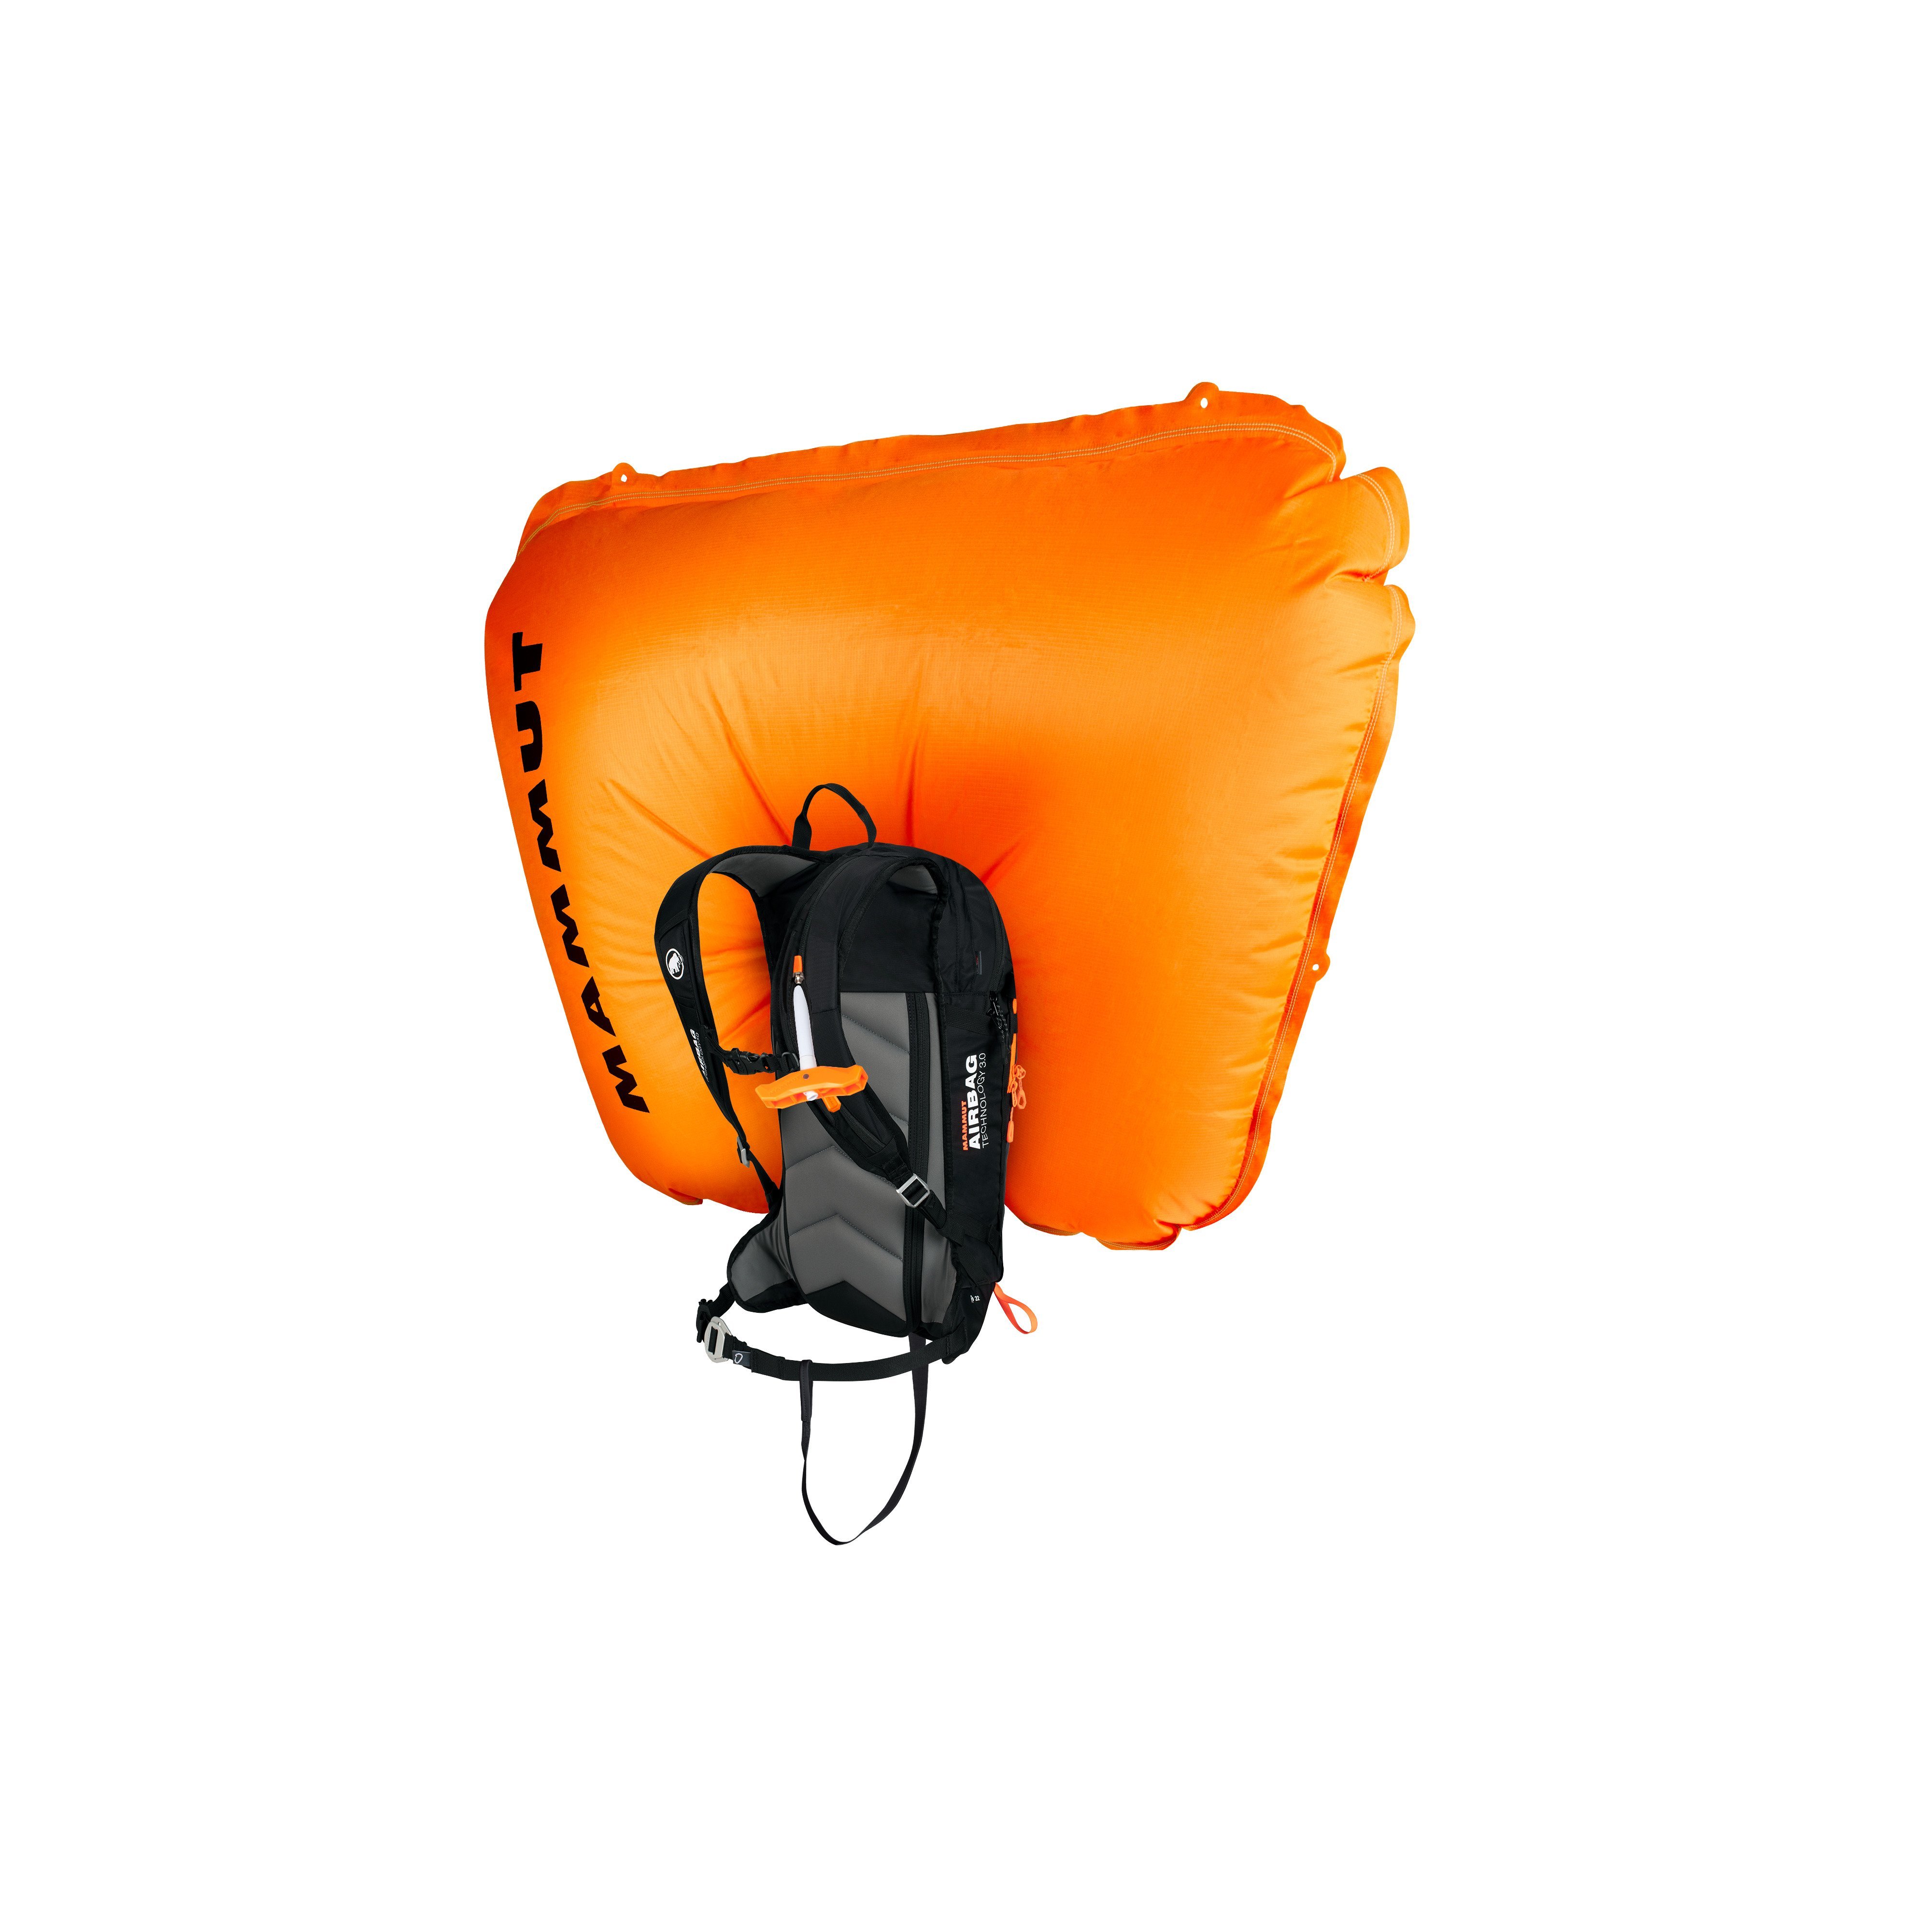 Flip Removable Airbag 3.0 - black-vibrant orange, 22 L product image